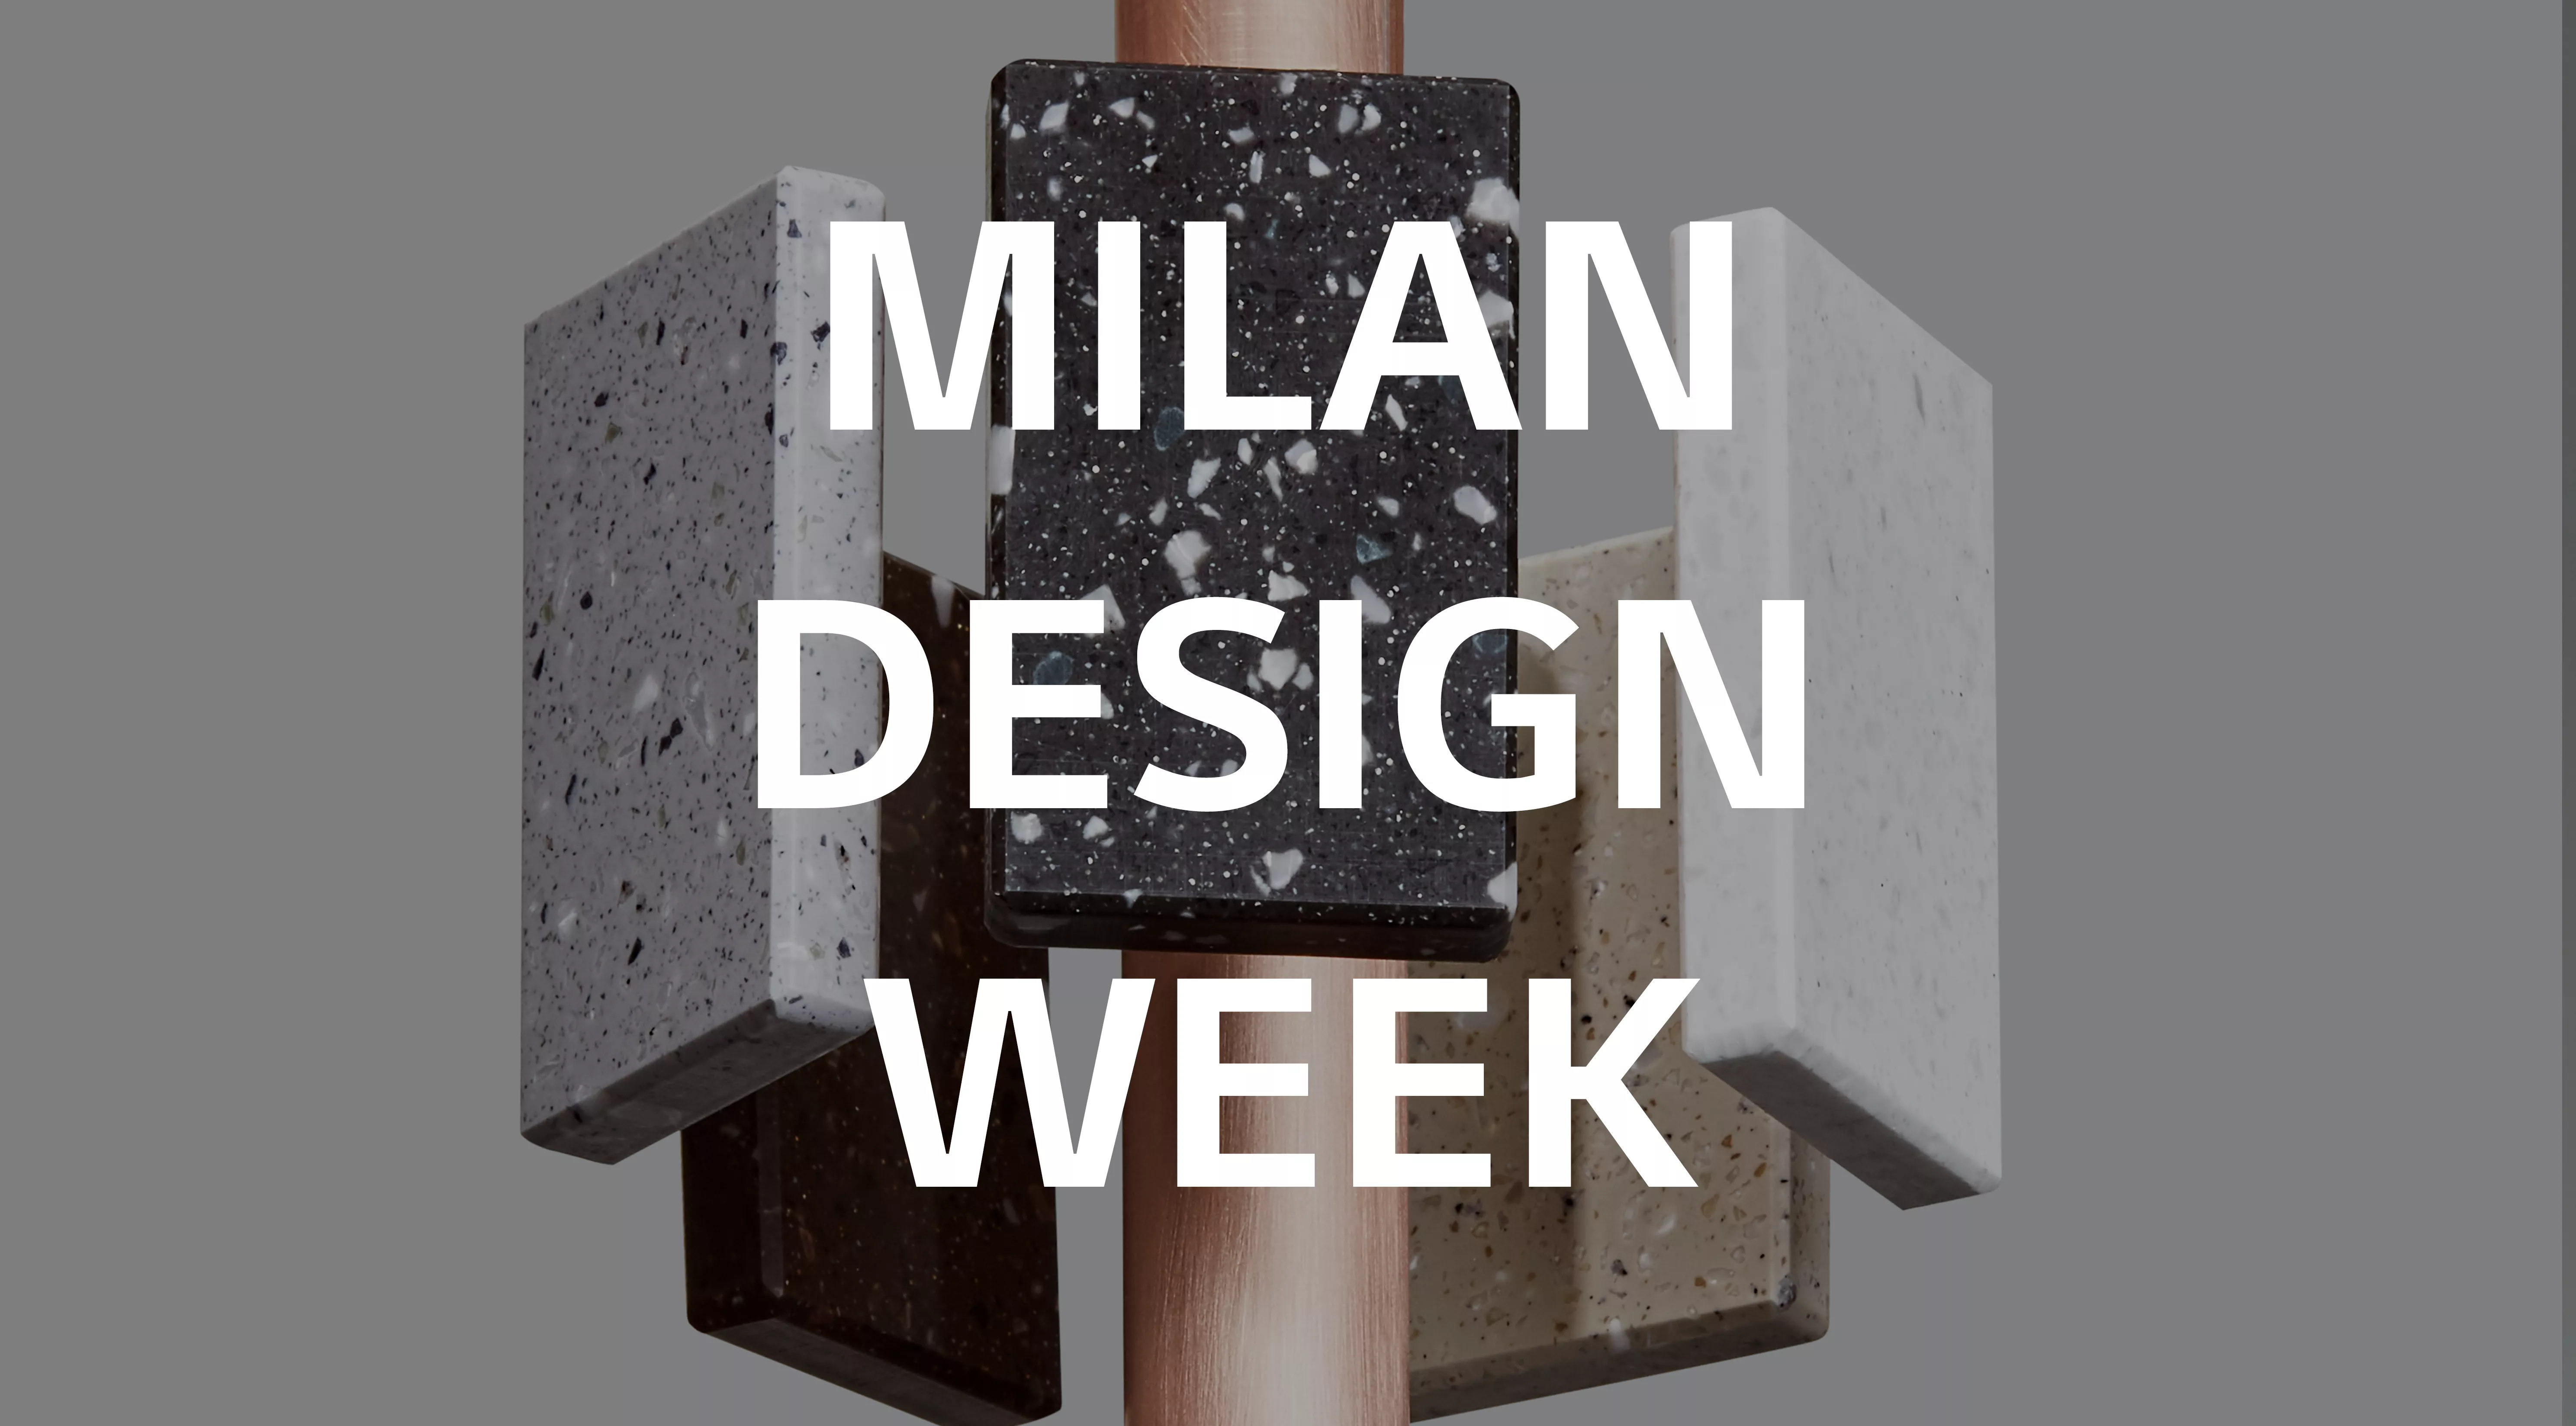 HIMACS: Milan Design Week 2018 